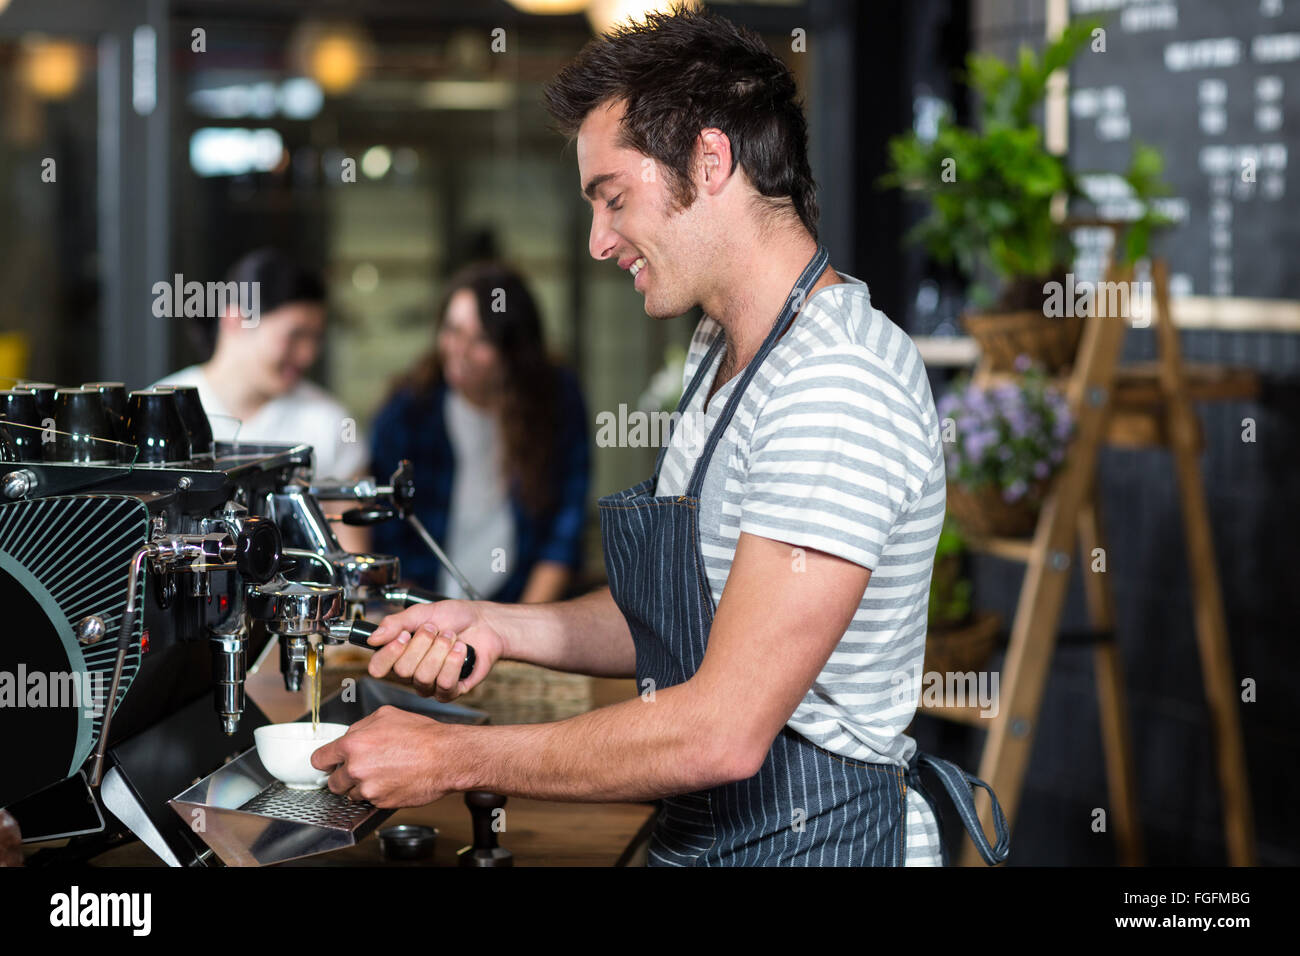 Smiling barista making coffee Stock Photo